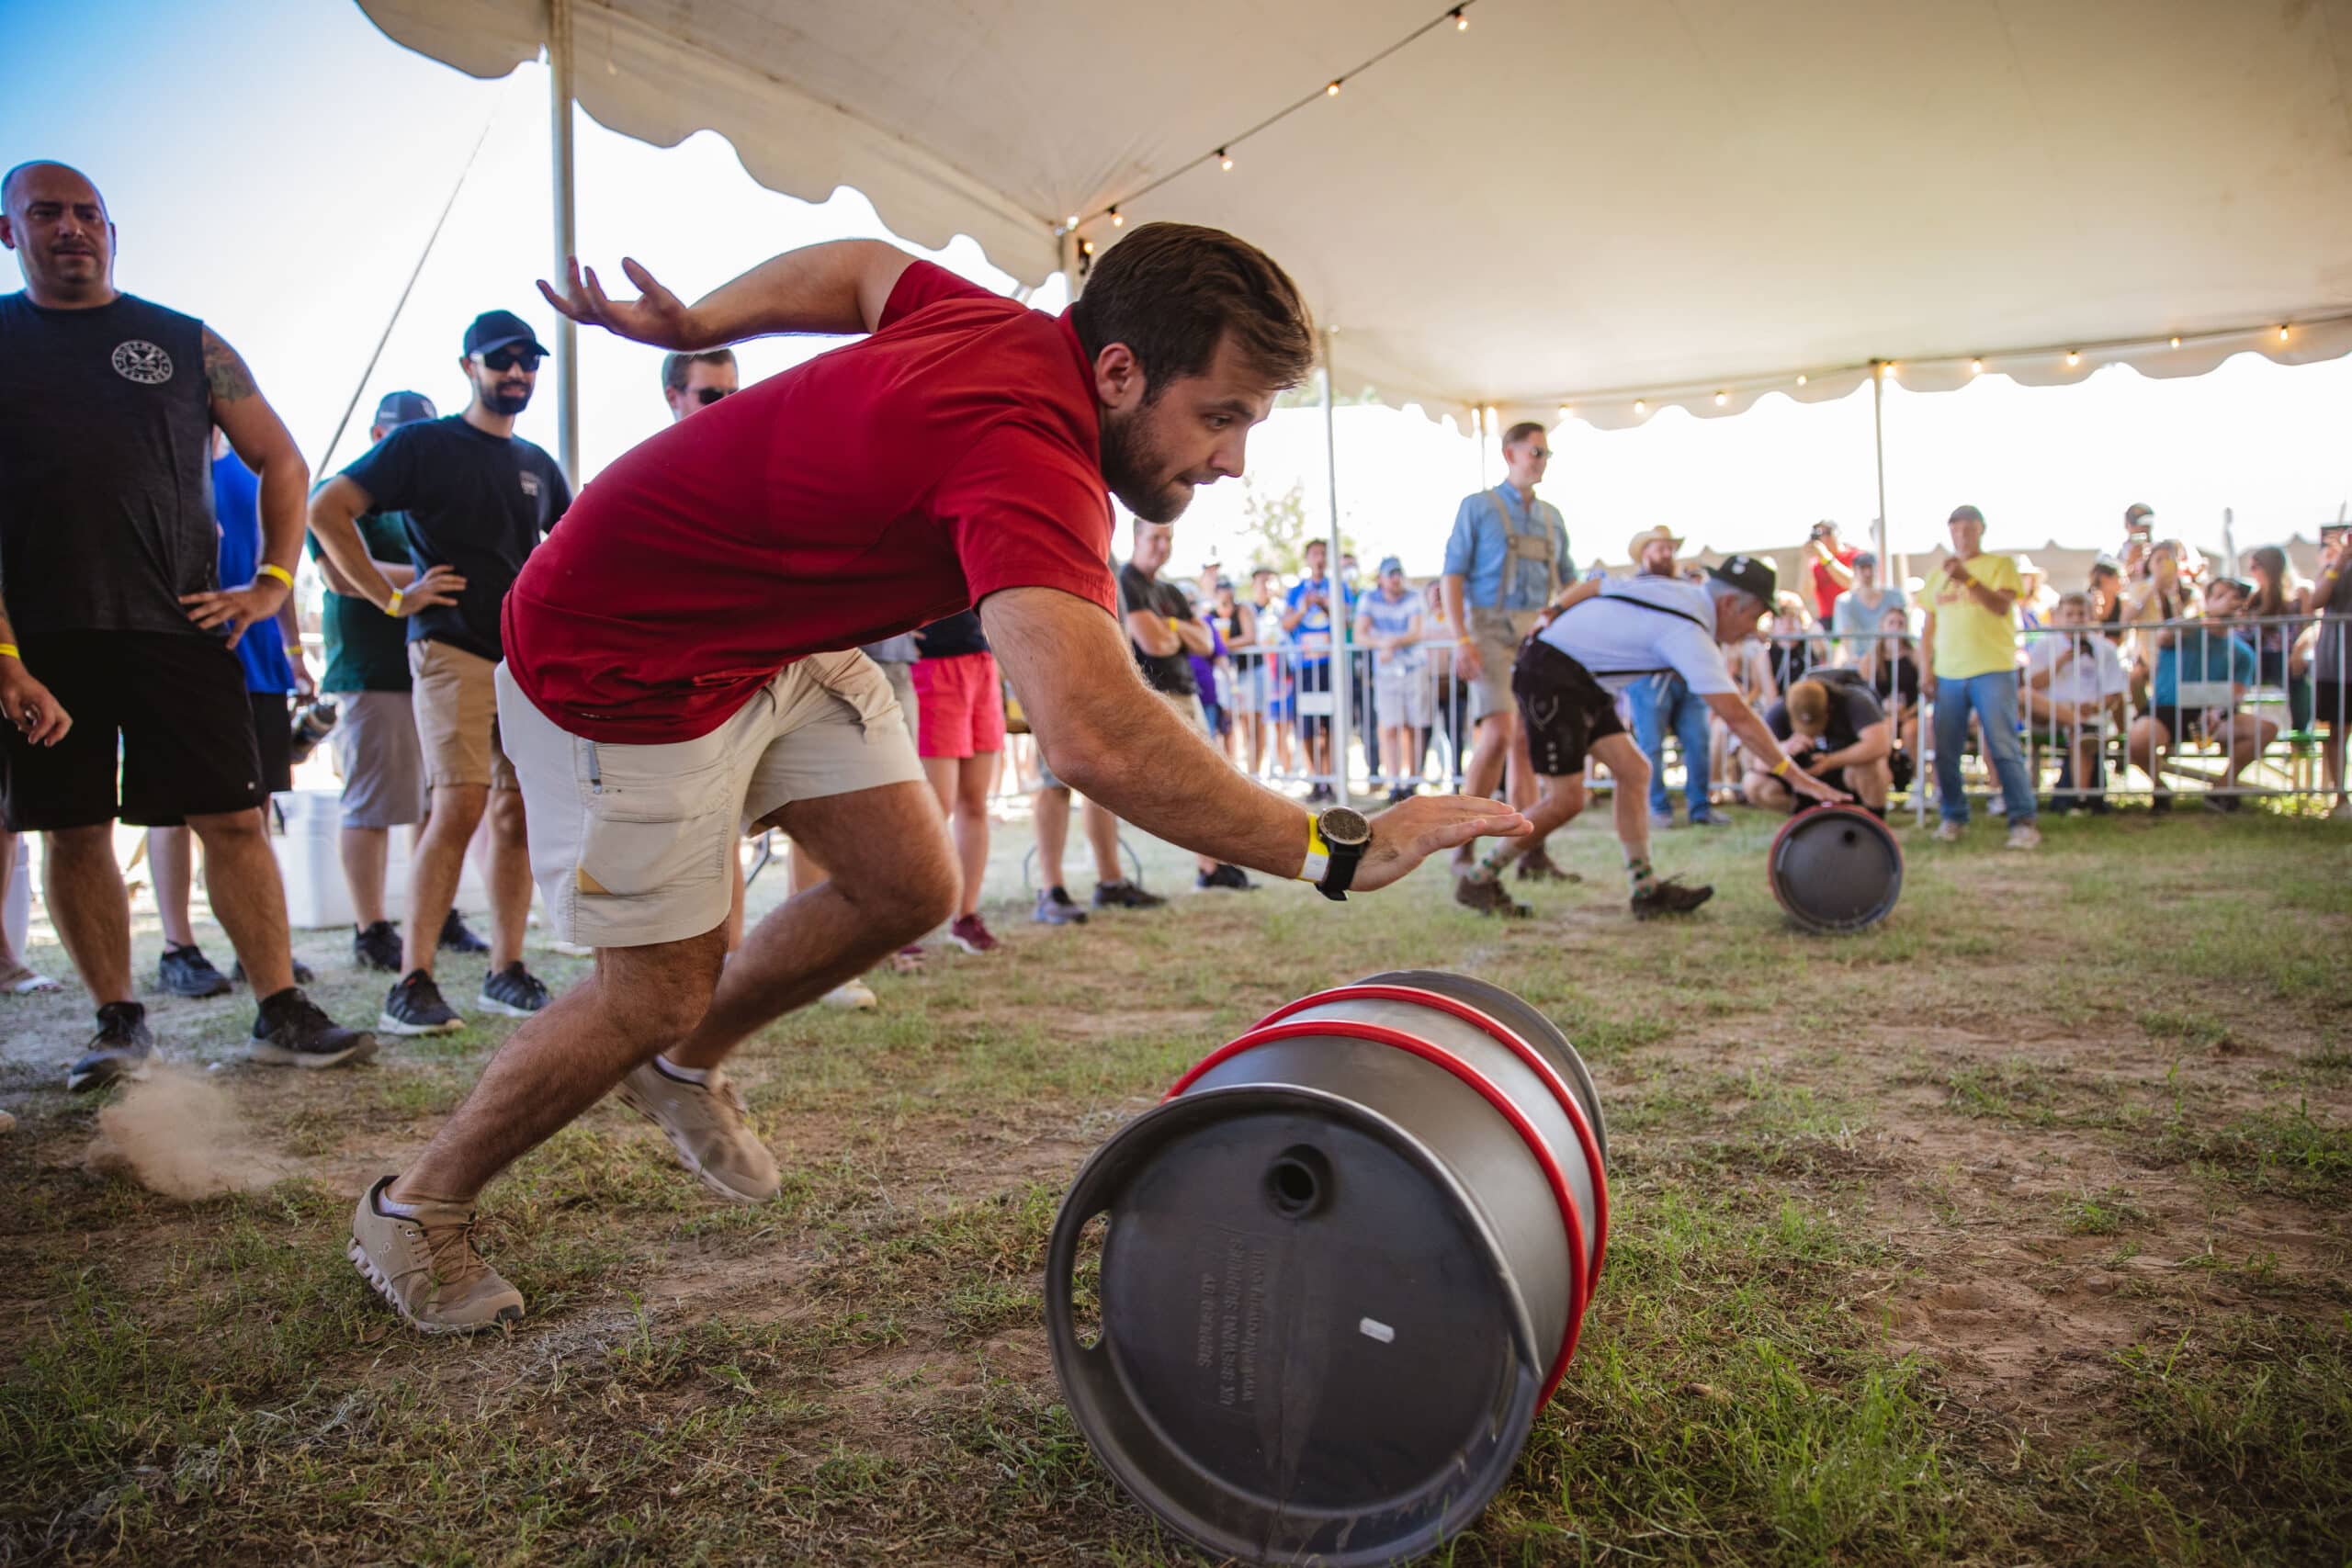 Bier Barrel Rolling at Fort Worth Oktoberfest